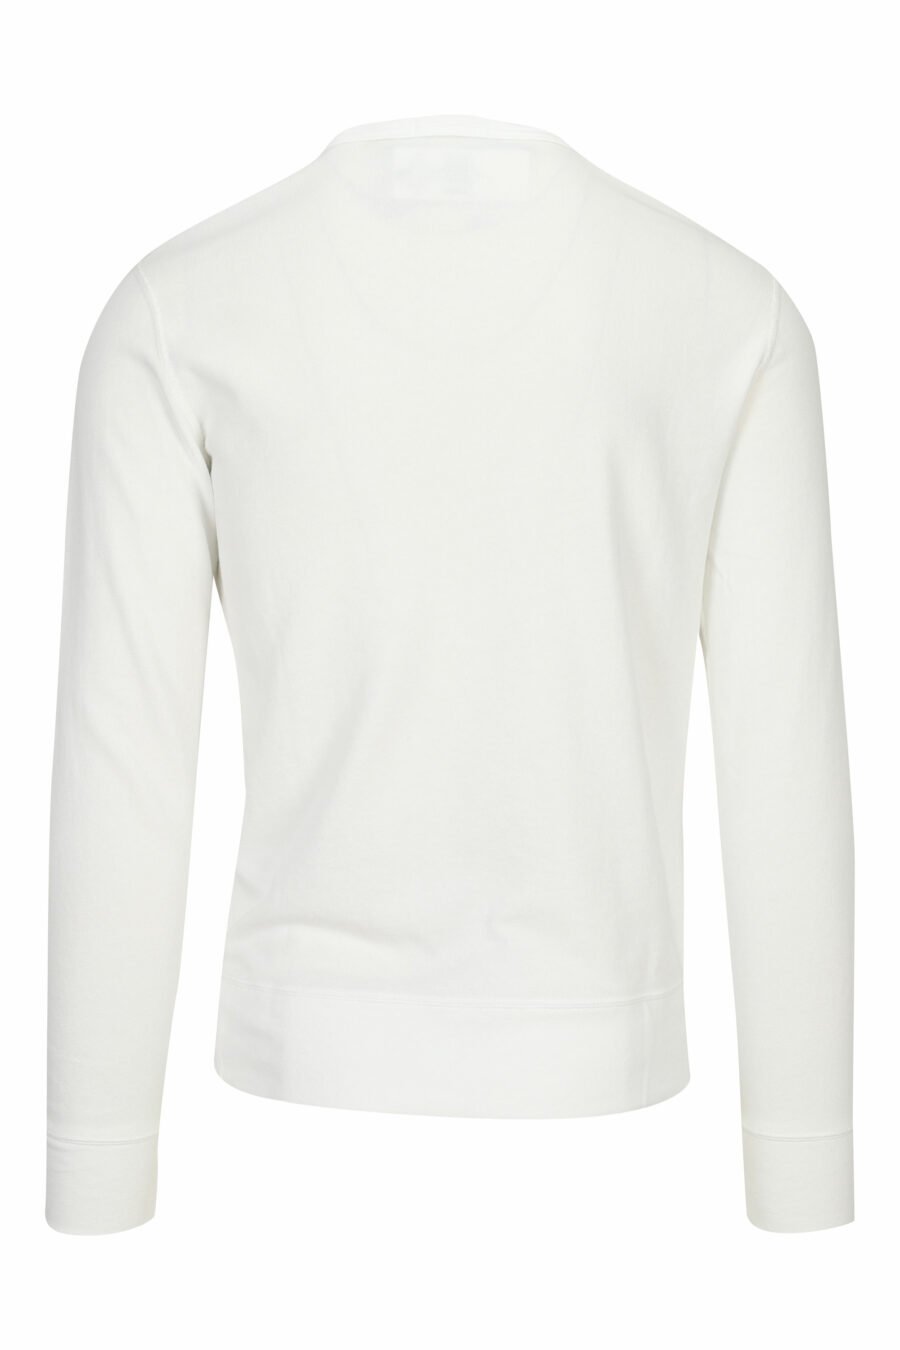 White sweatshirt with minilogue "polo" - 3616851410768 1